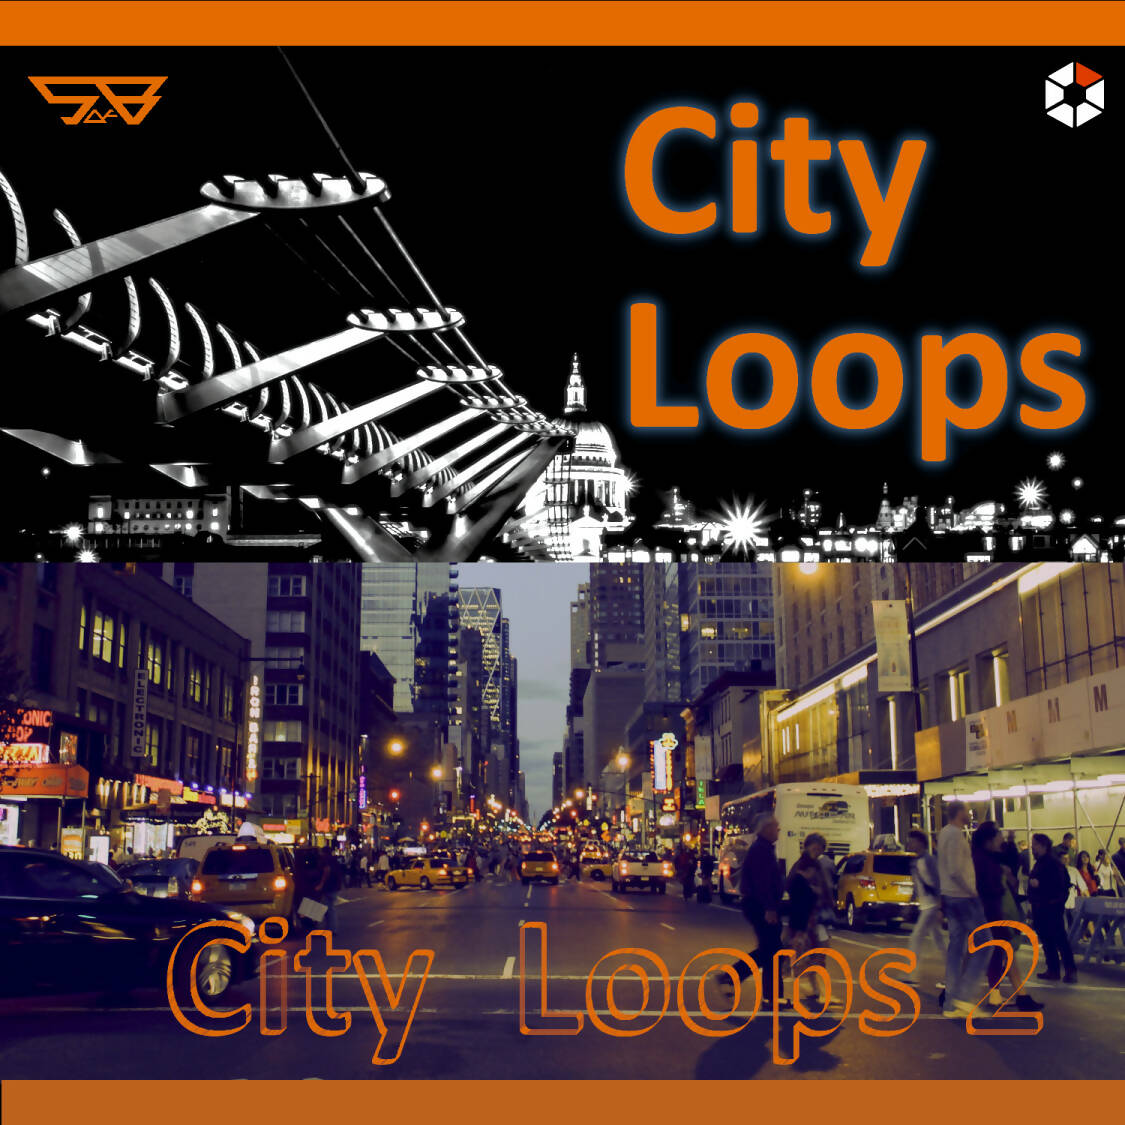 Atlas 2 - City Loops 1 & 2 Double Pack